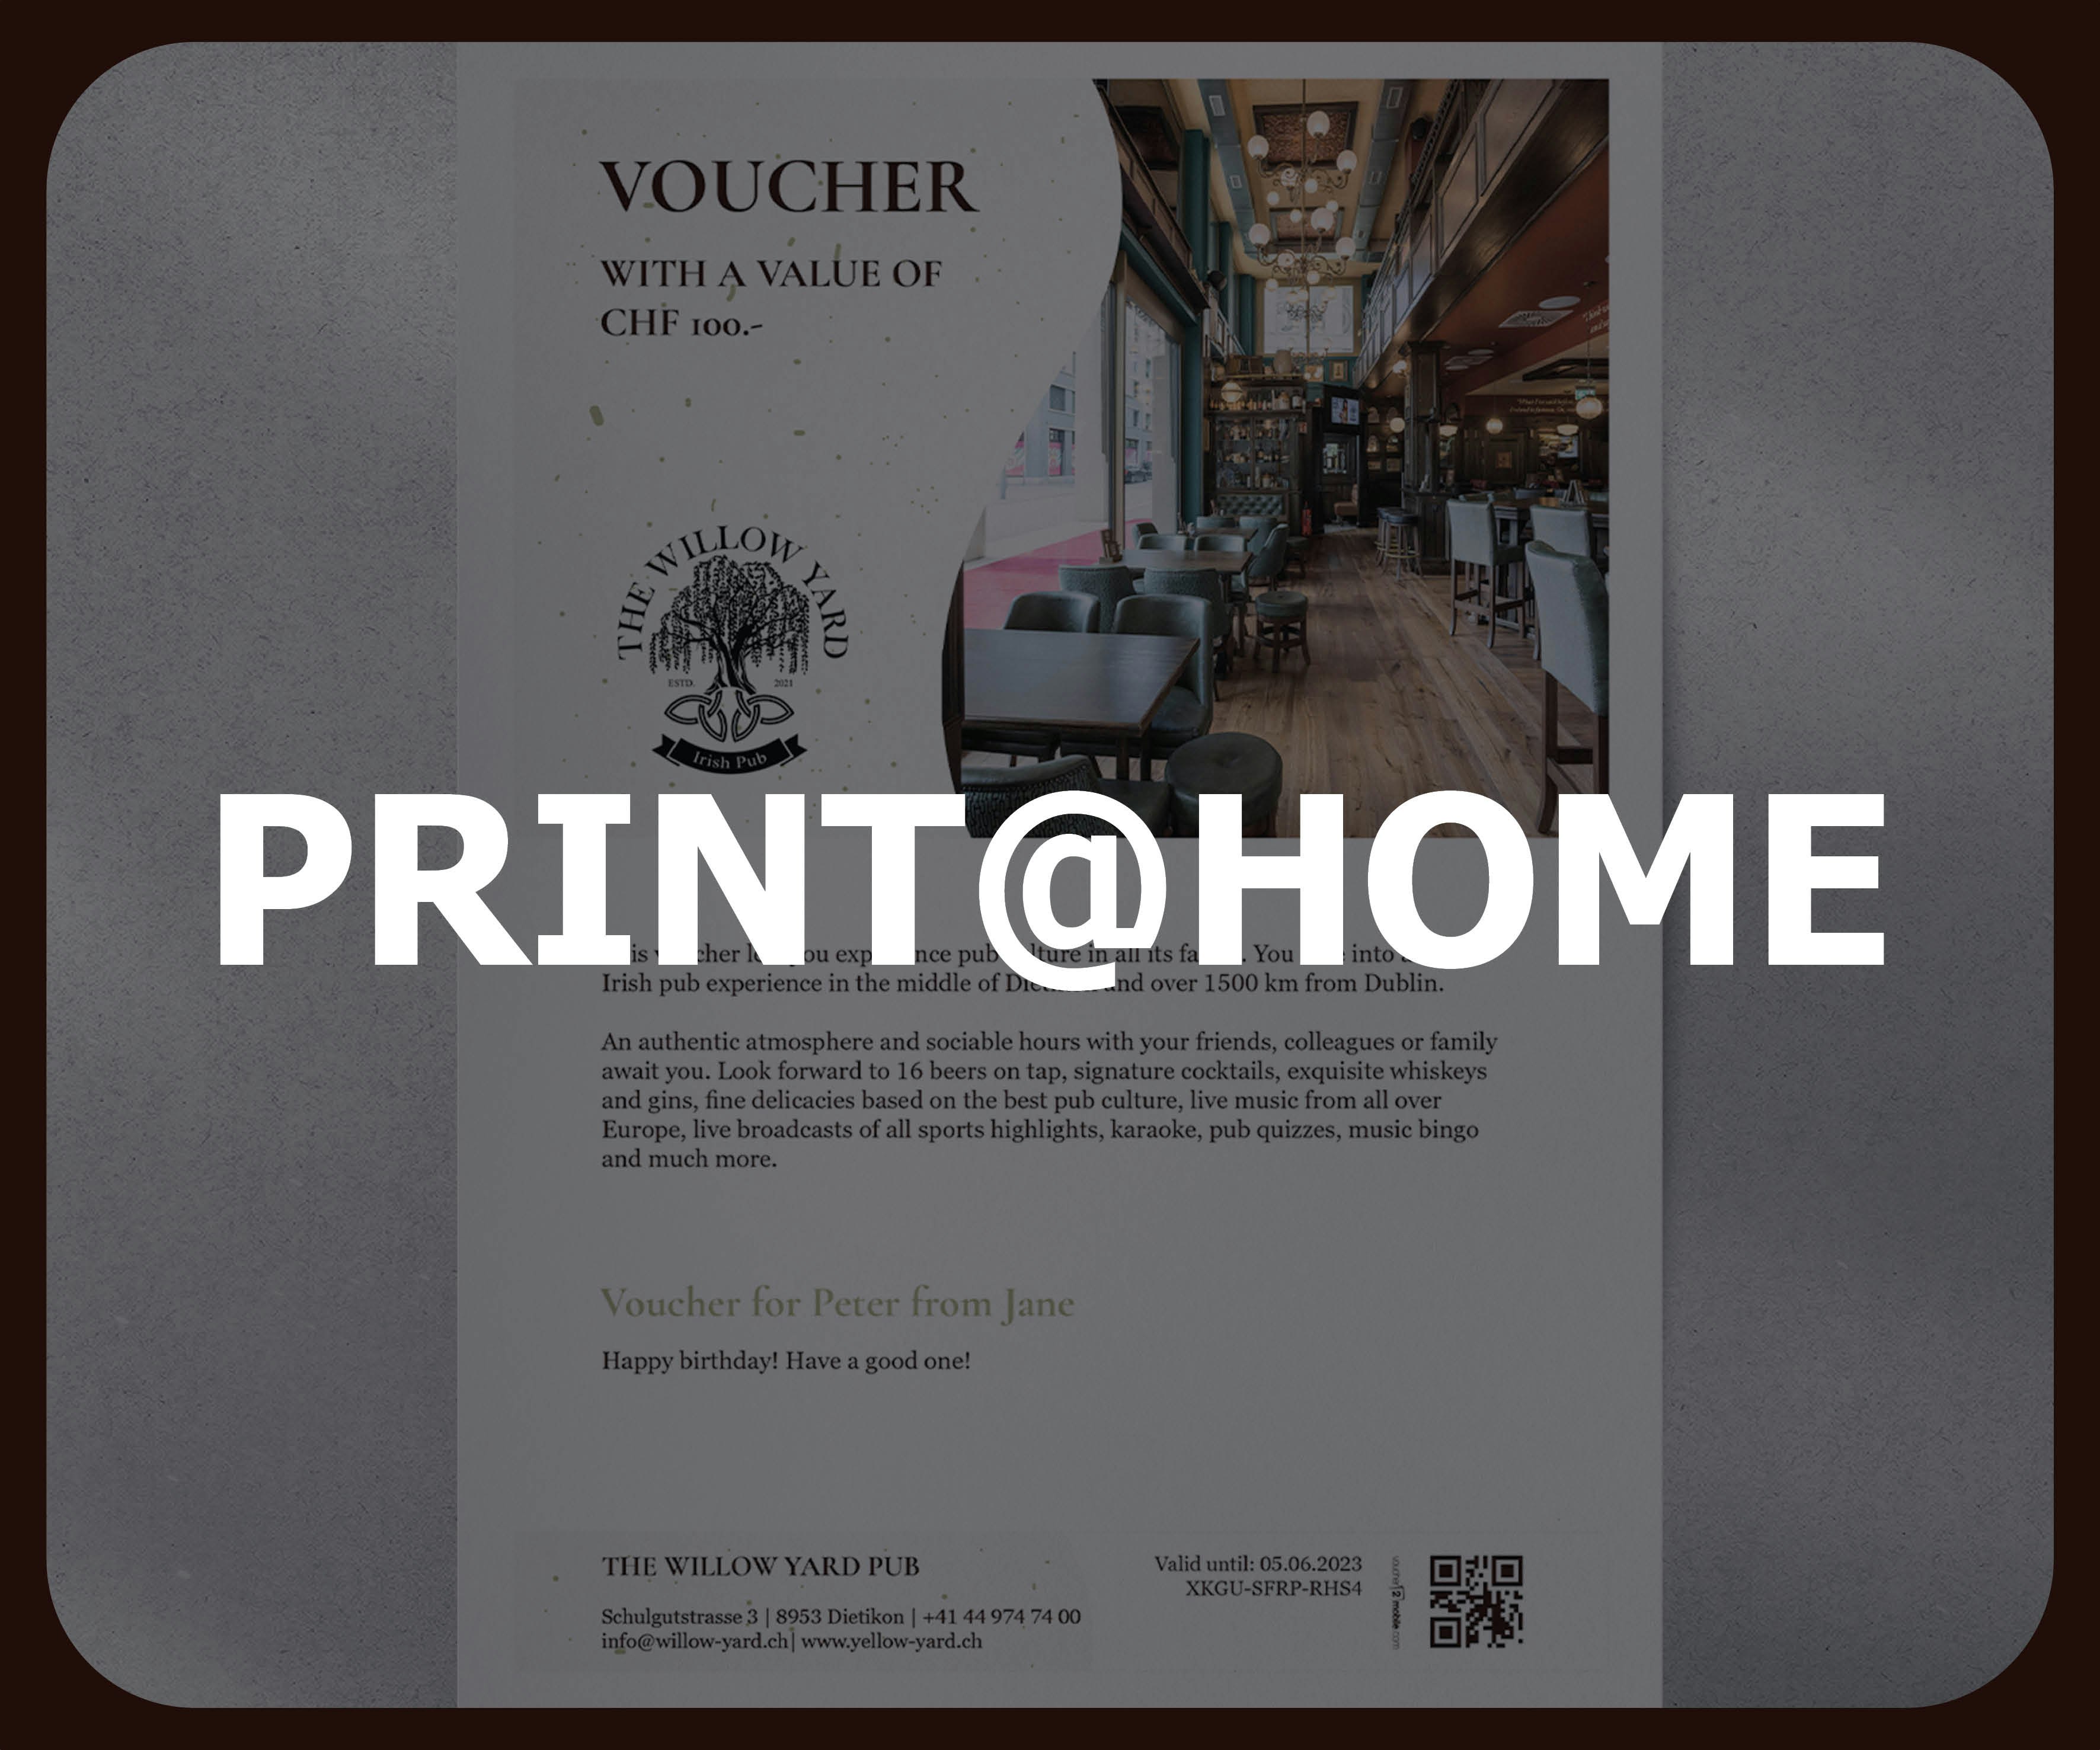 Willow Yard Card print@home